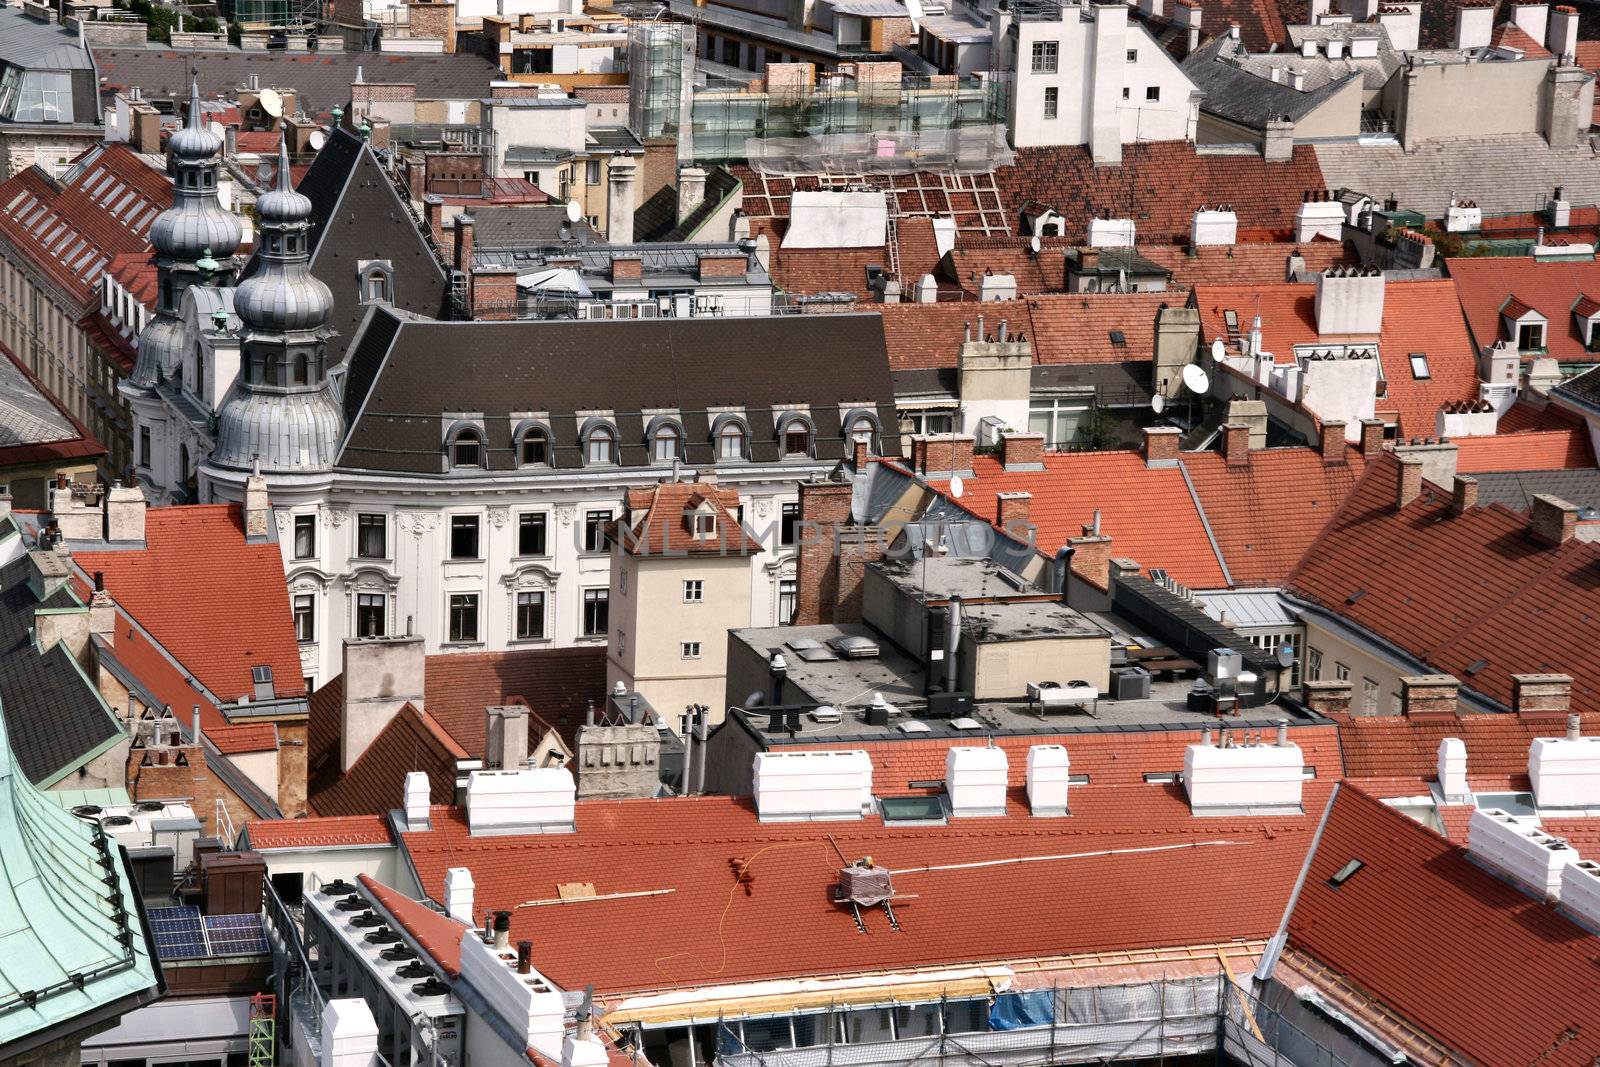 City roofs by tupungato